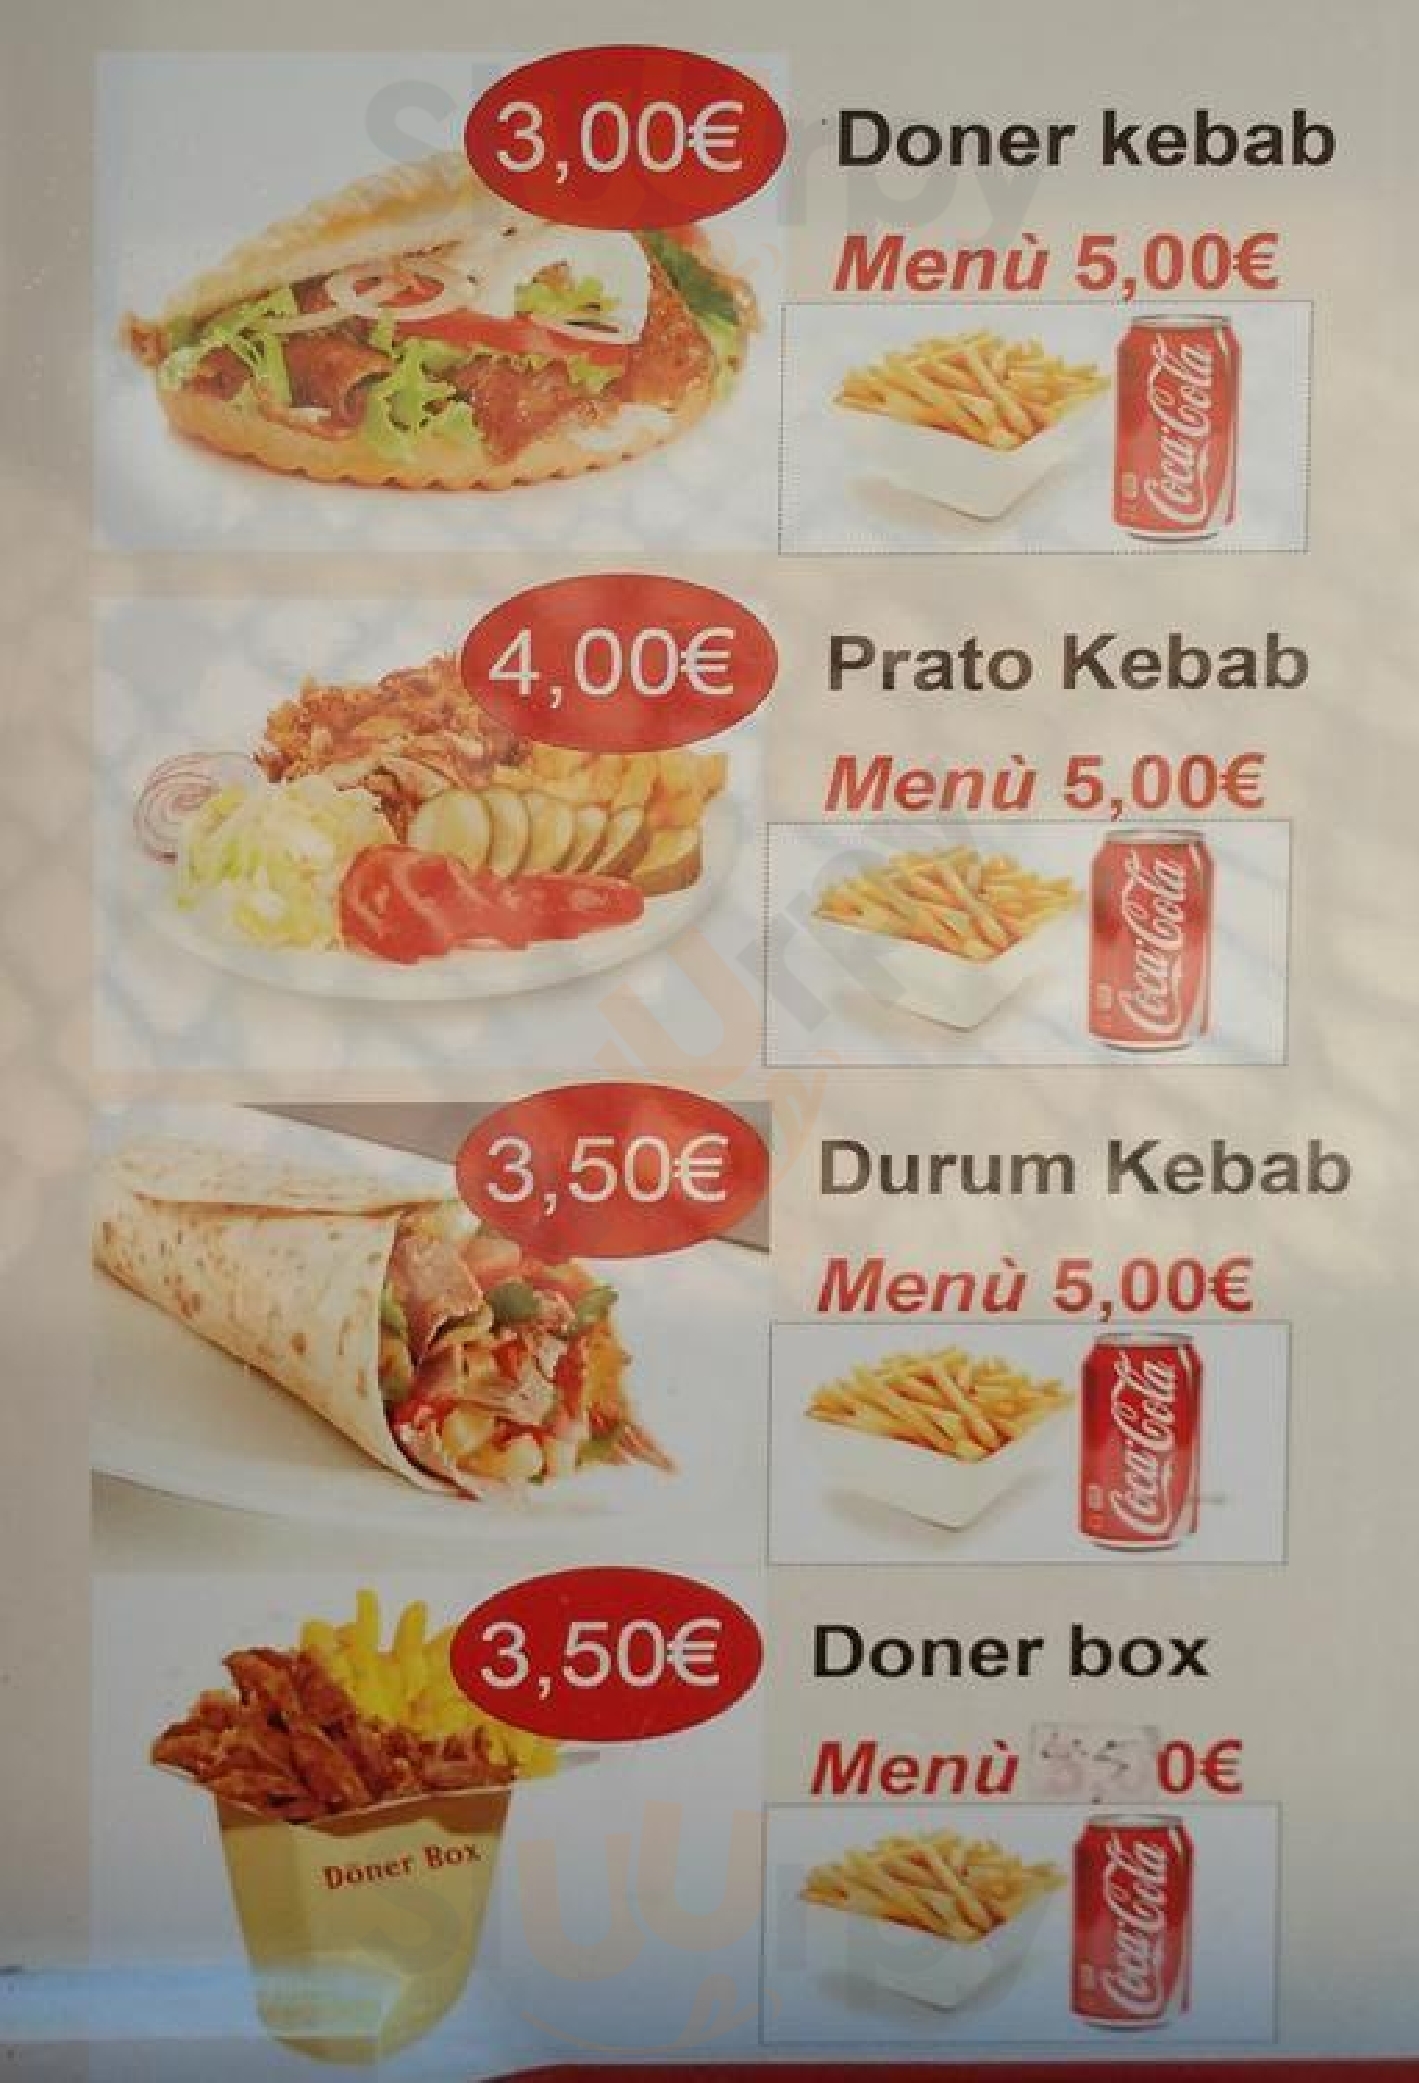 Doner Kebab House Lisboa Menu - 1